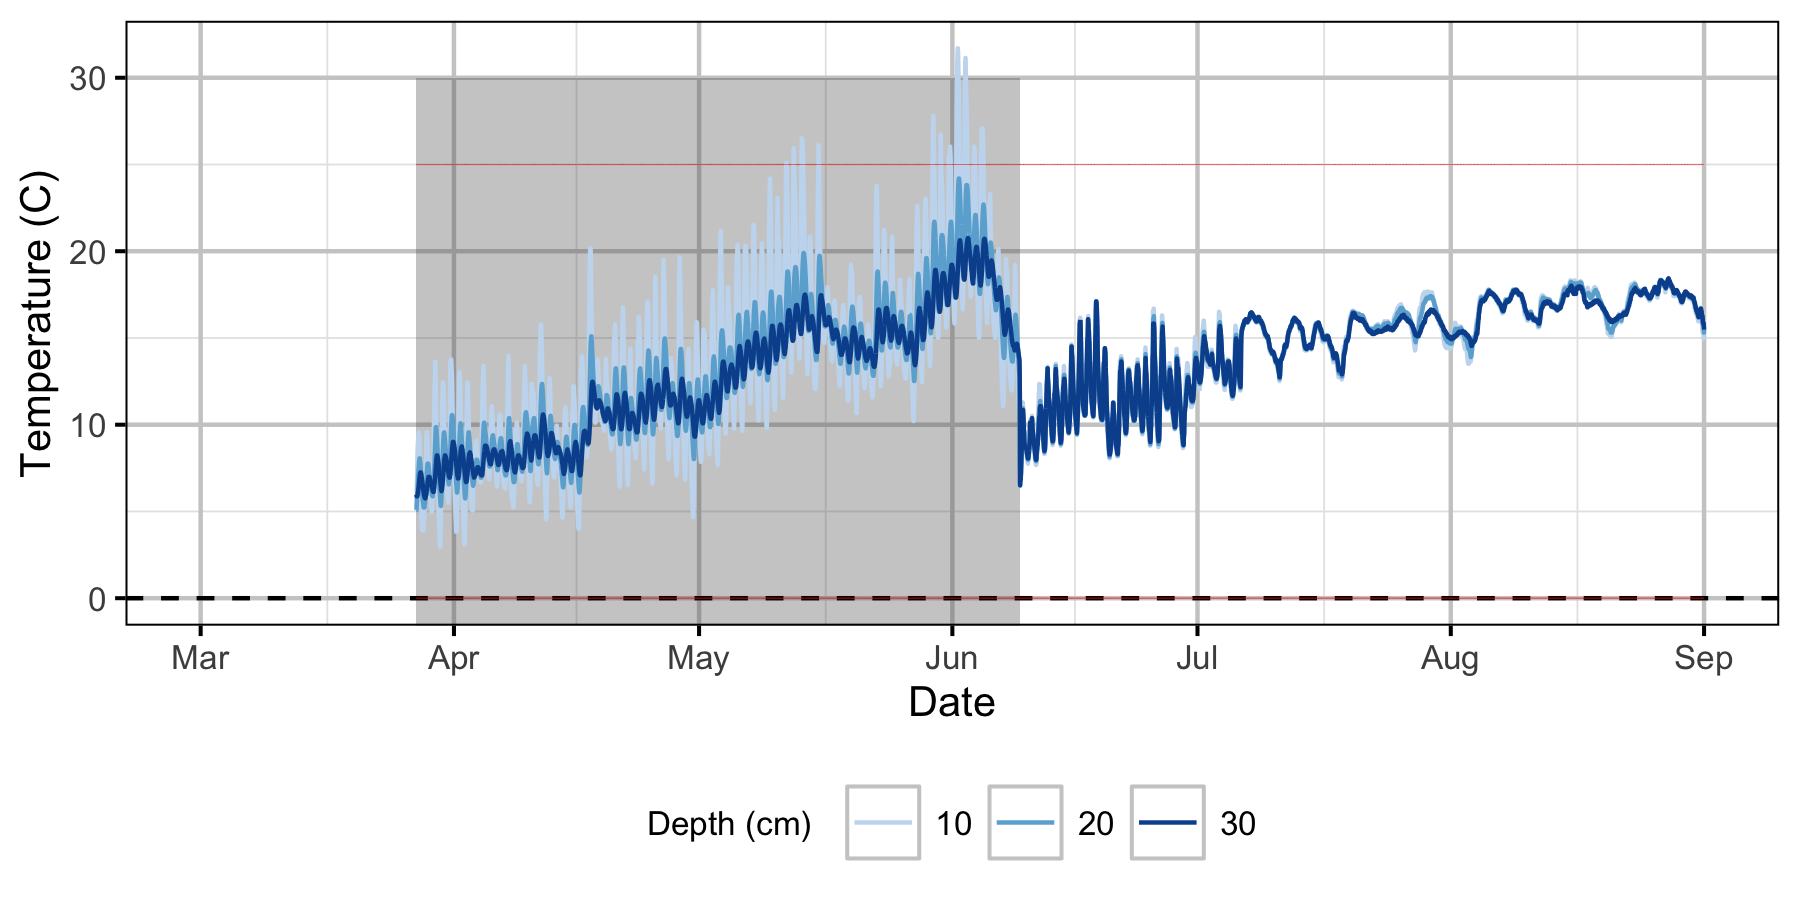 figures/Sensor Data/Absolute Gravel Temperature Stations/Norns Creek Fan/Station06.png